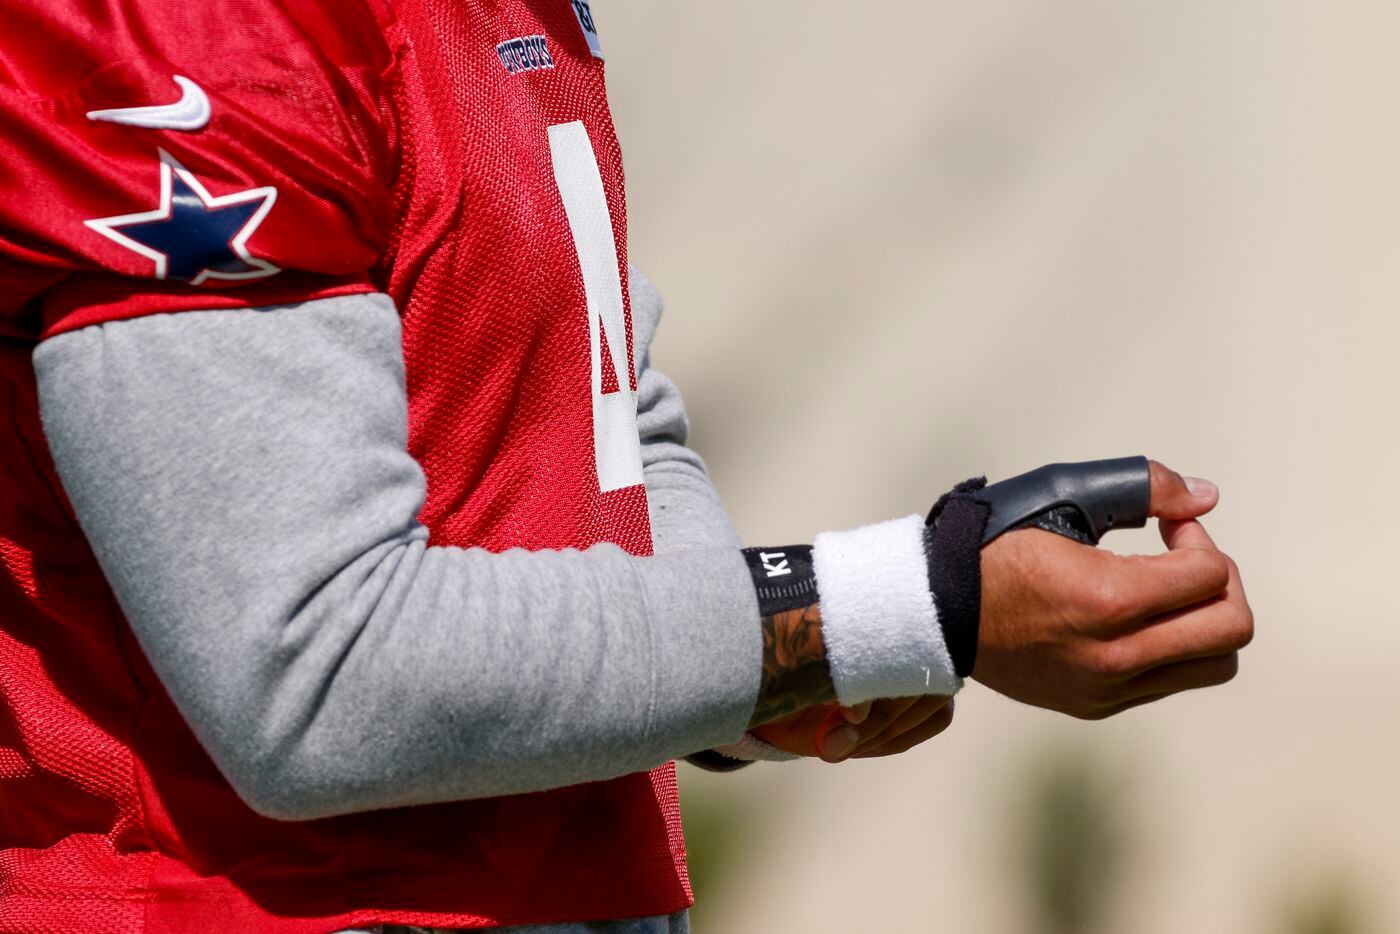 Dallas Cowboys quarterback Dak Prescott (4) adjusts a brace on his injured thumb during a...